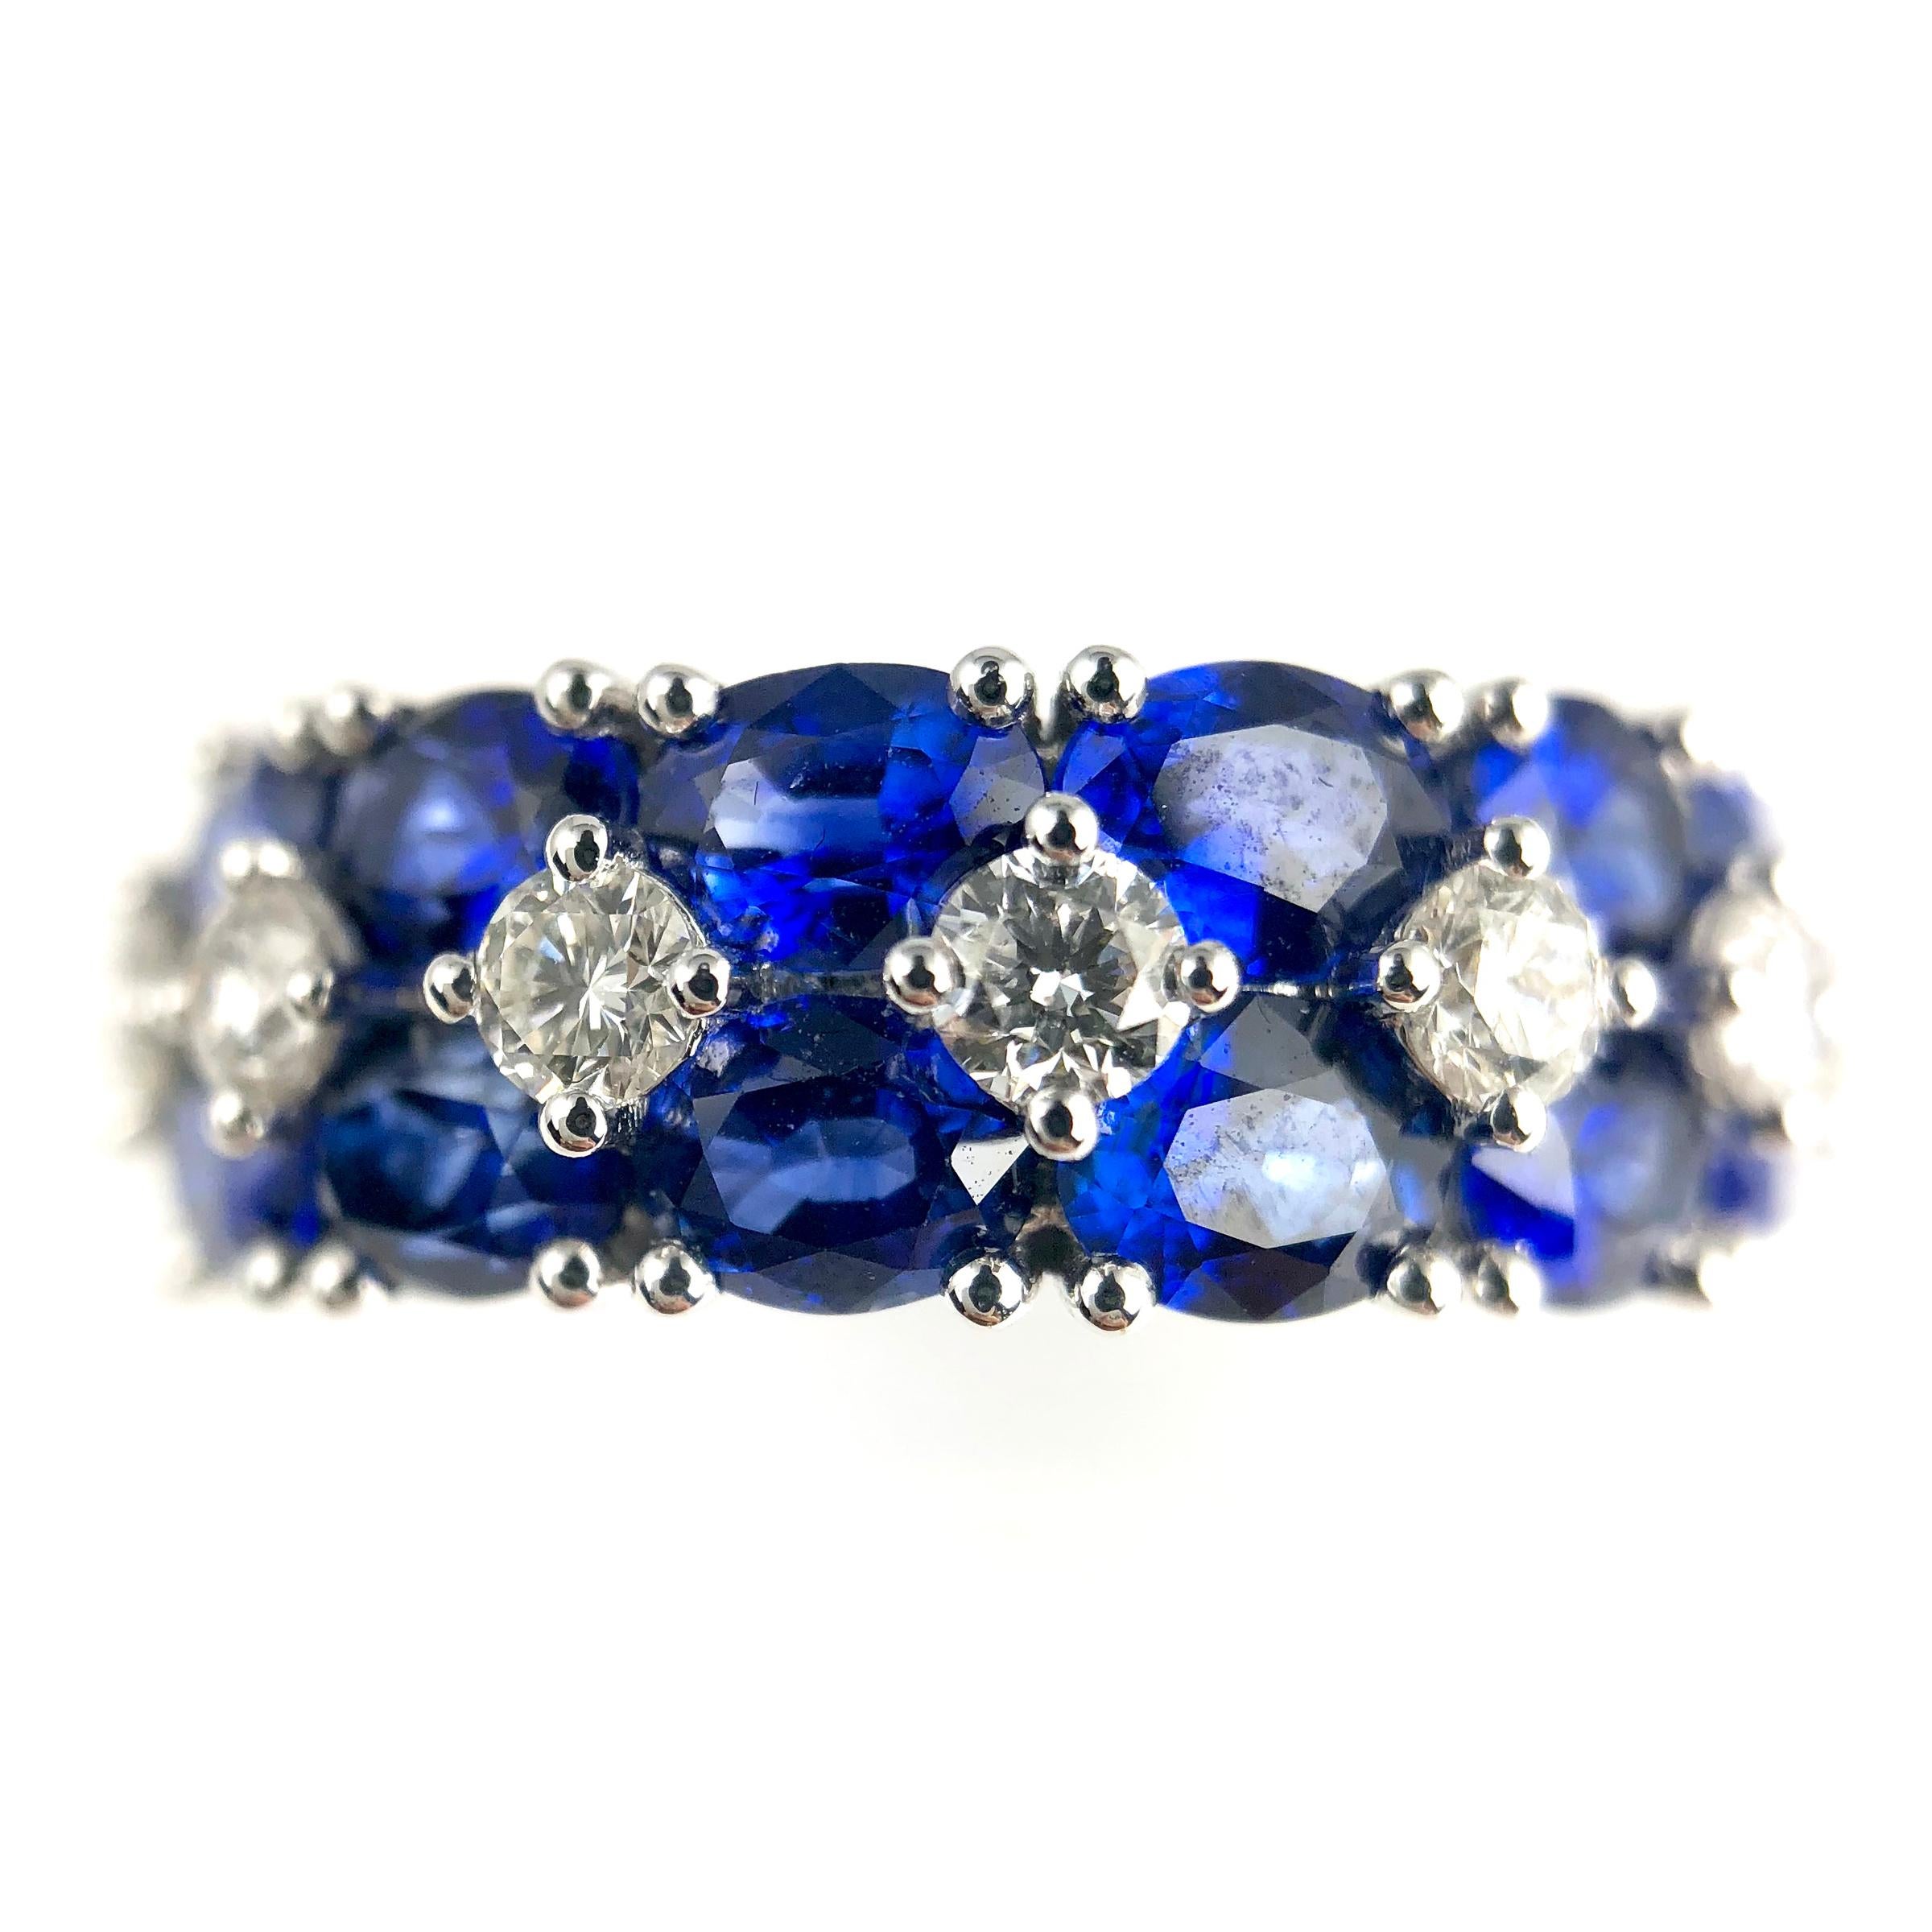 Contemporary 3.64 Carat Blue Sapphire and 0.52 Carat Diamond Fashion Ring in 18 Karat Gold